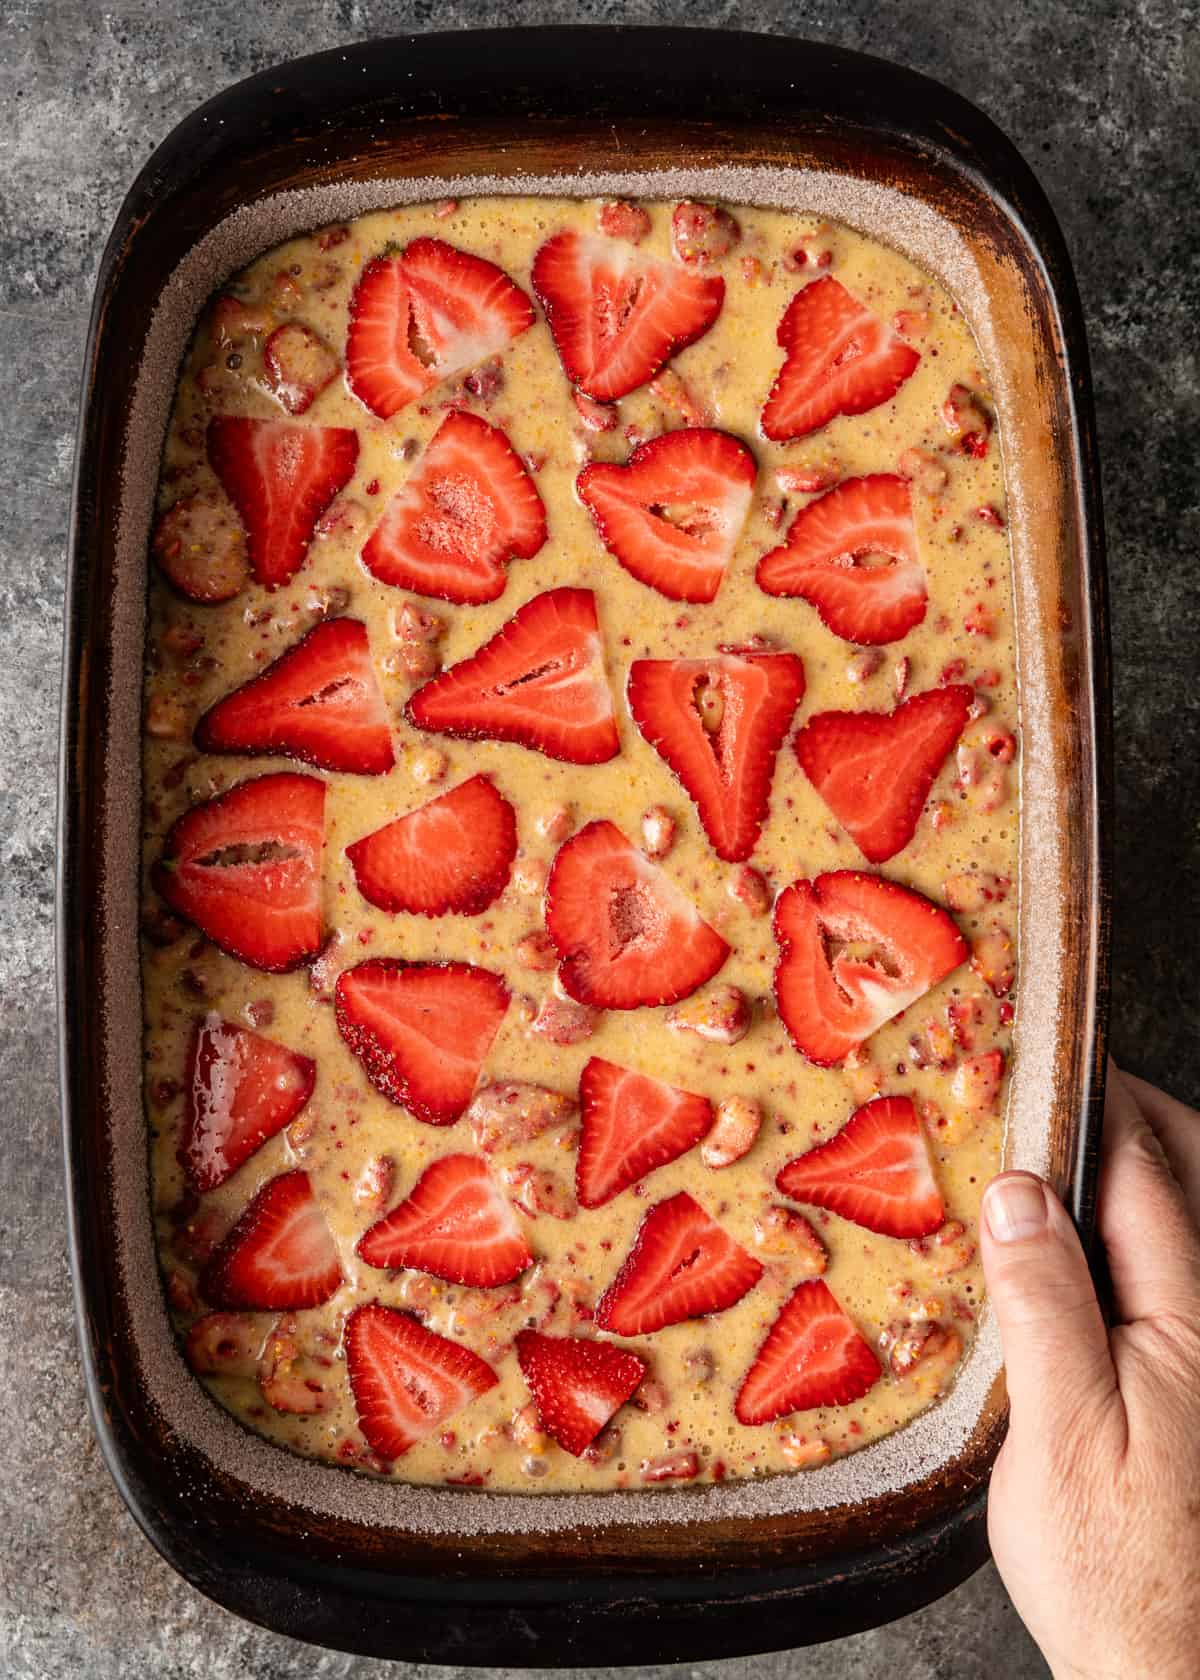 overhead: fresh cut strawberries on top of unbaked cornmeal cake